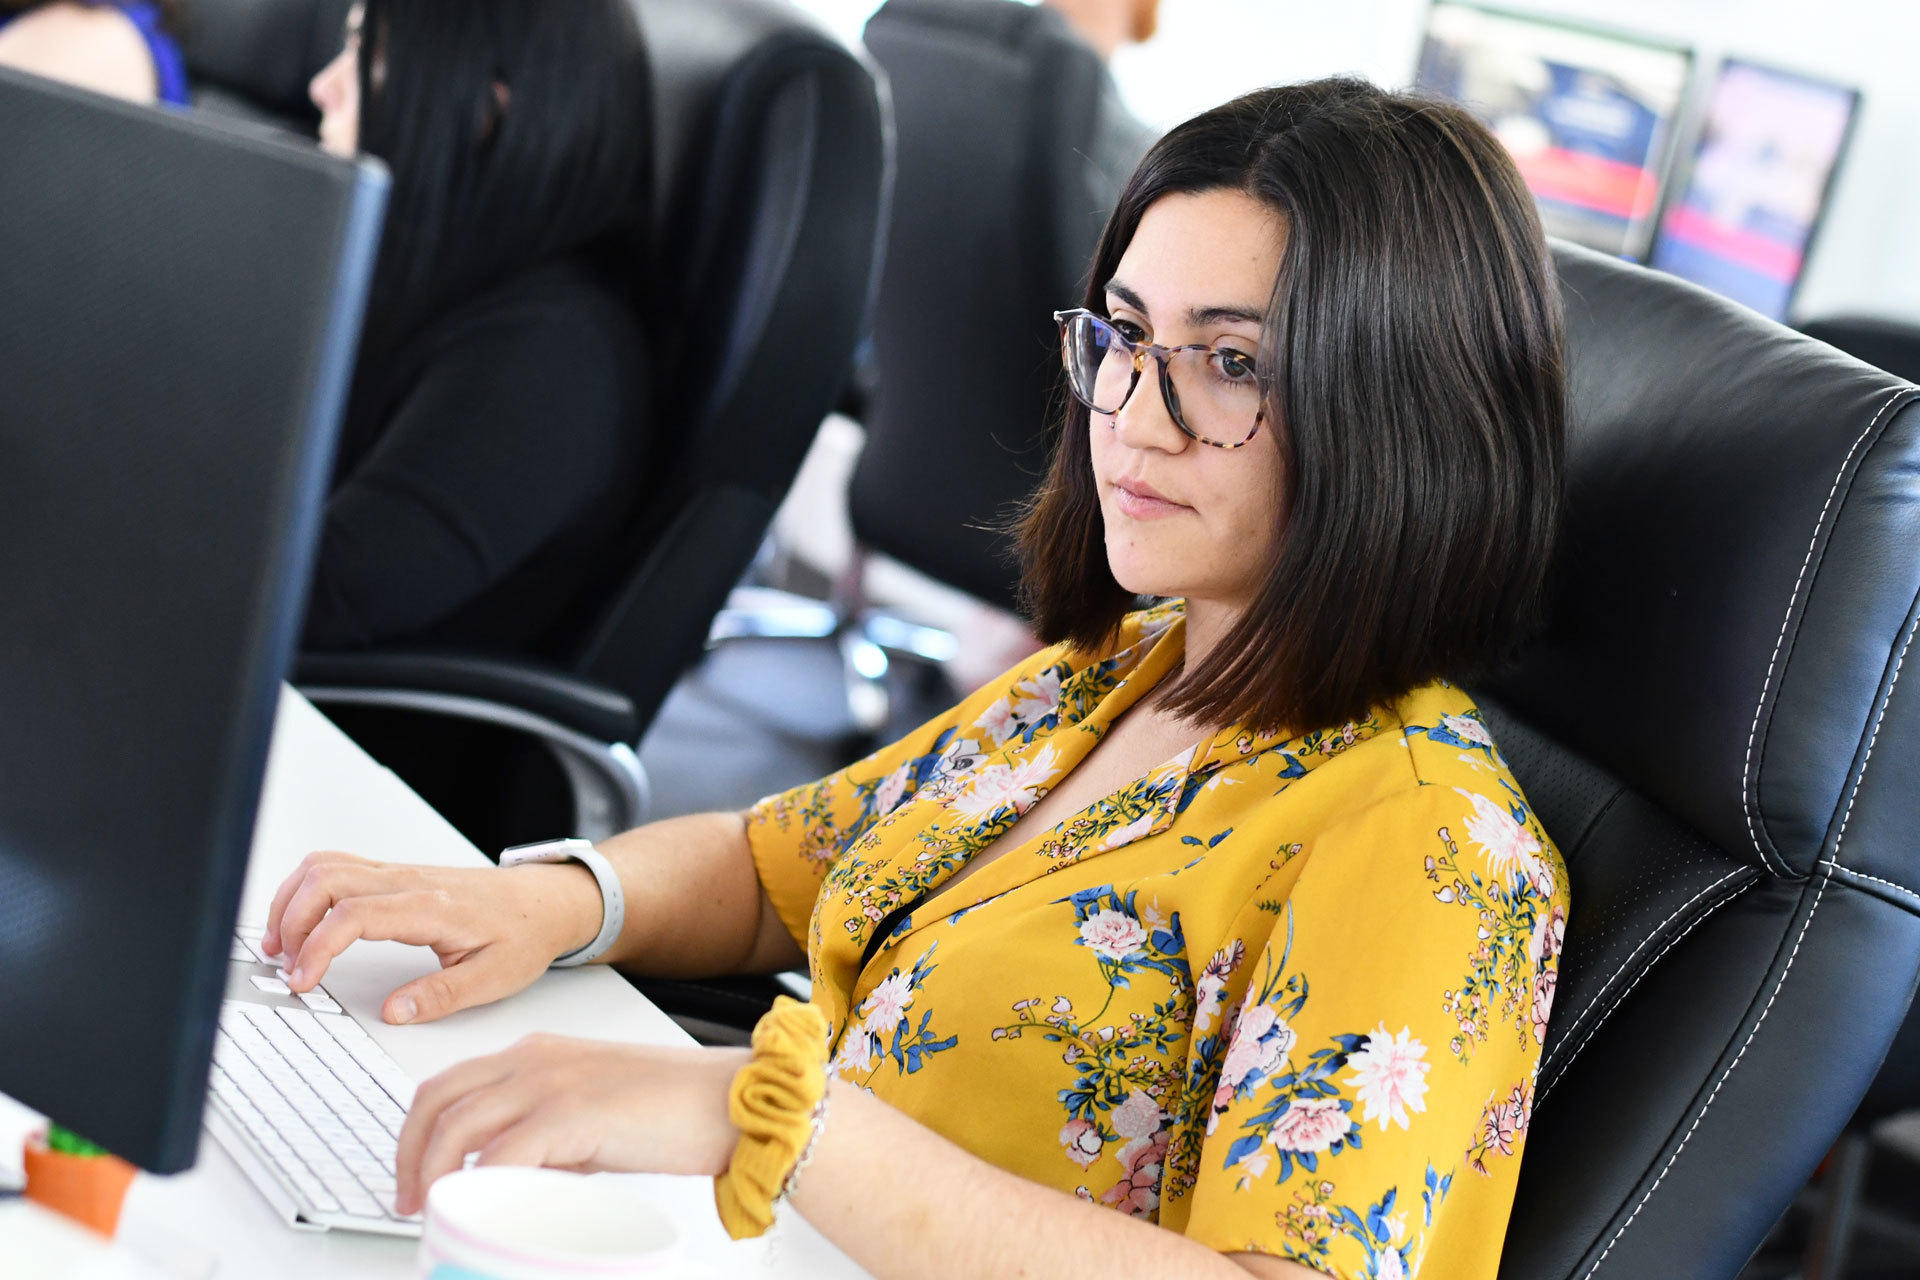 A woman sat at a desk working on her desktop computer